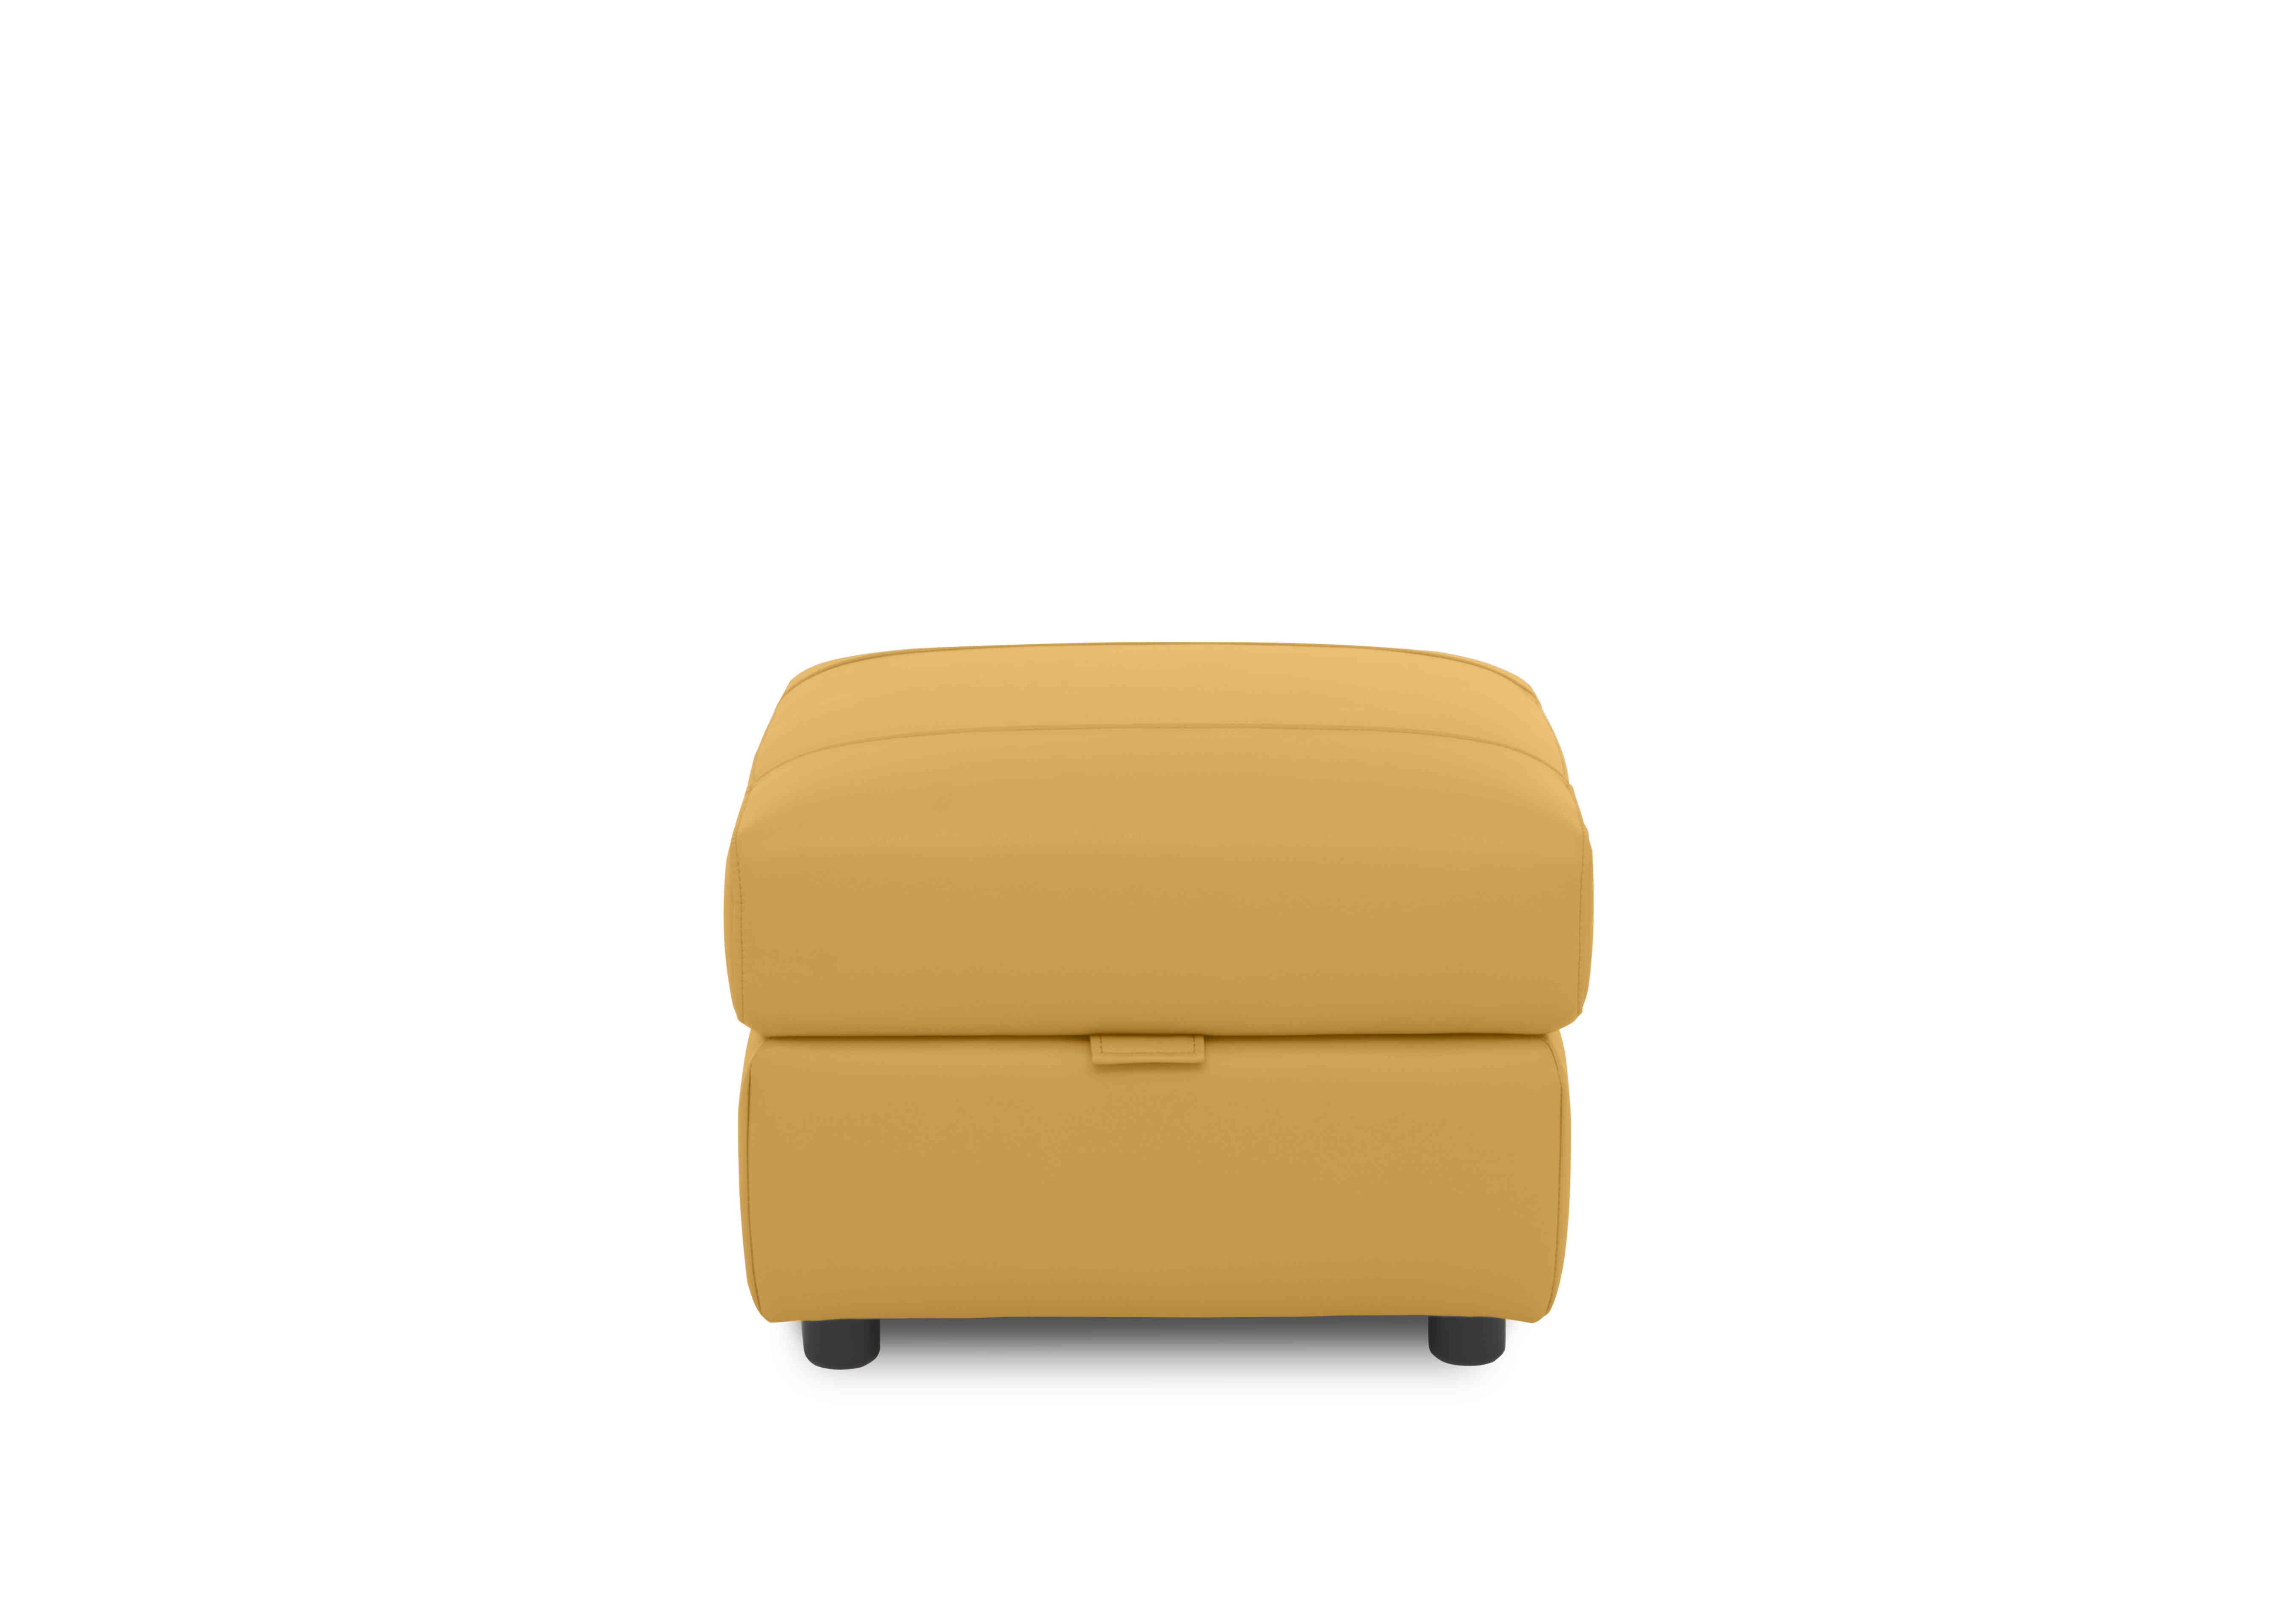 Sloane Leather Storage Footstool in Cat-35/14 Florida Sunburst on Furniture Village